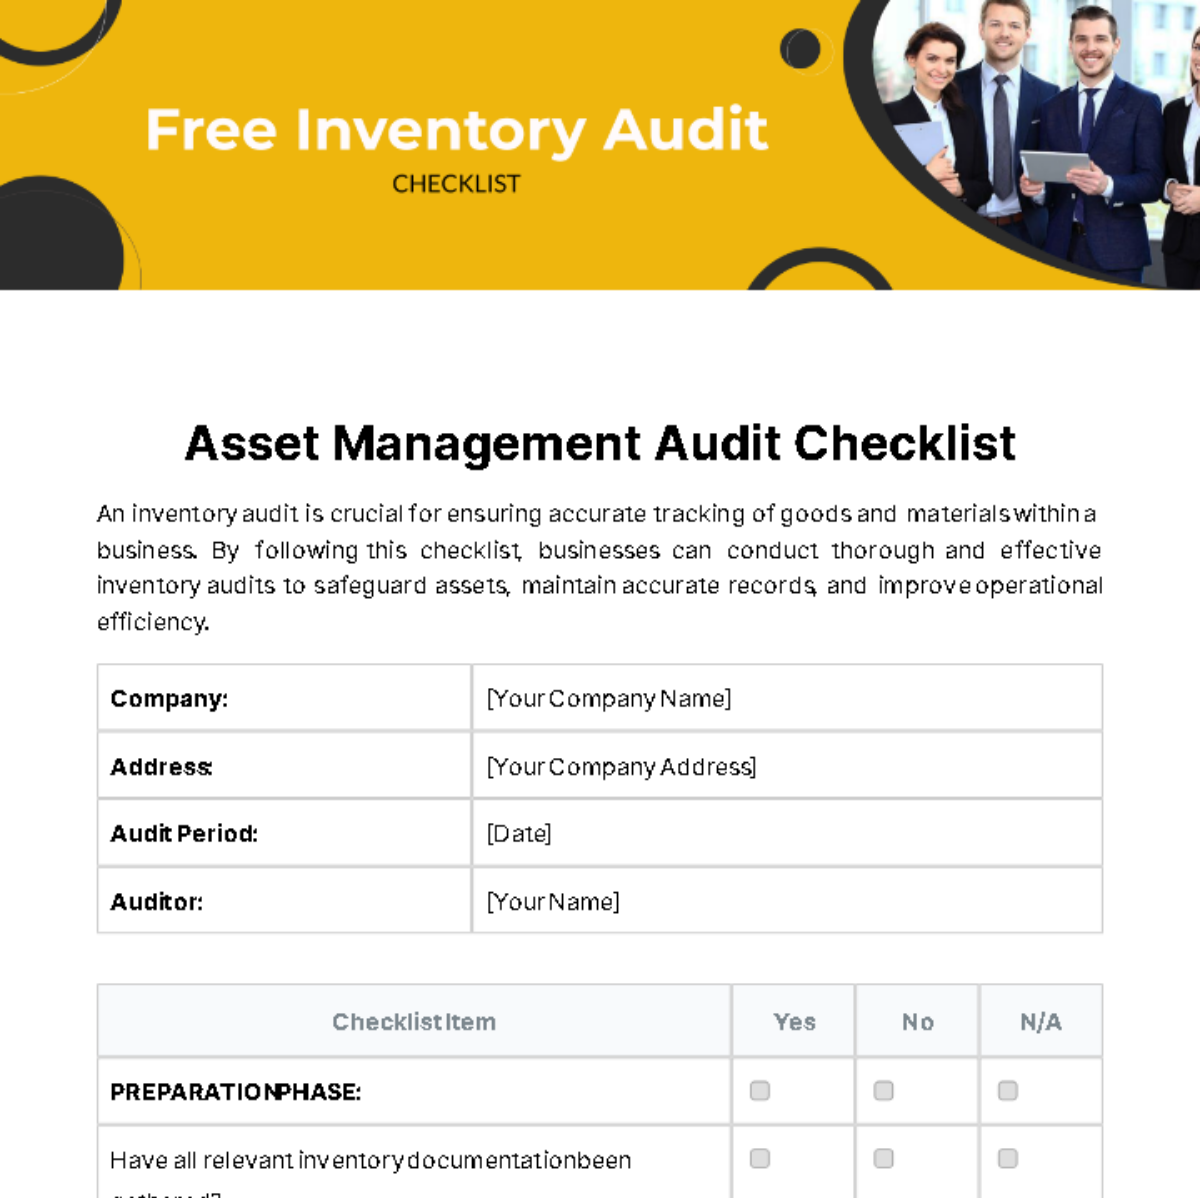 Inventory Audit Checklist Template